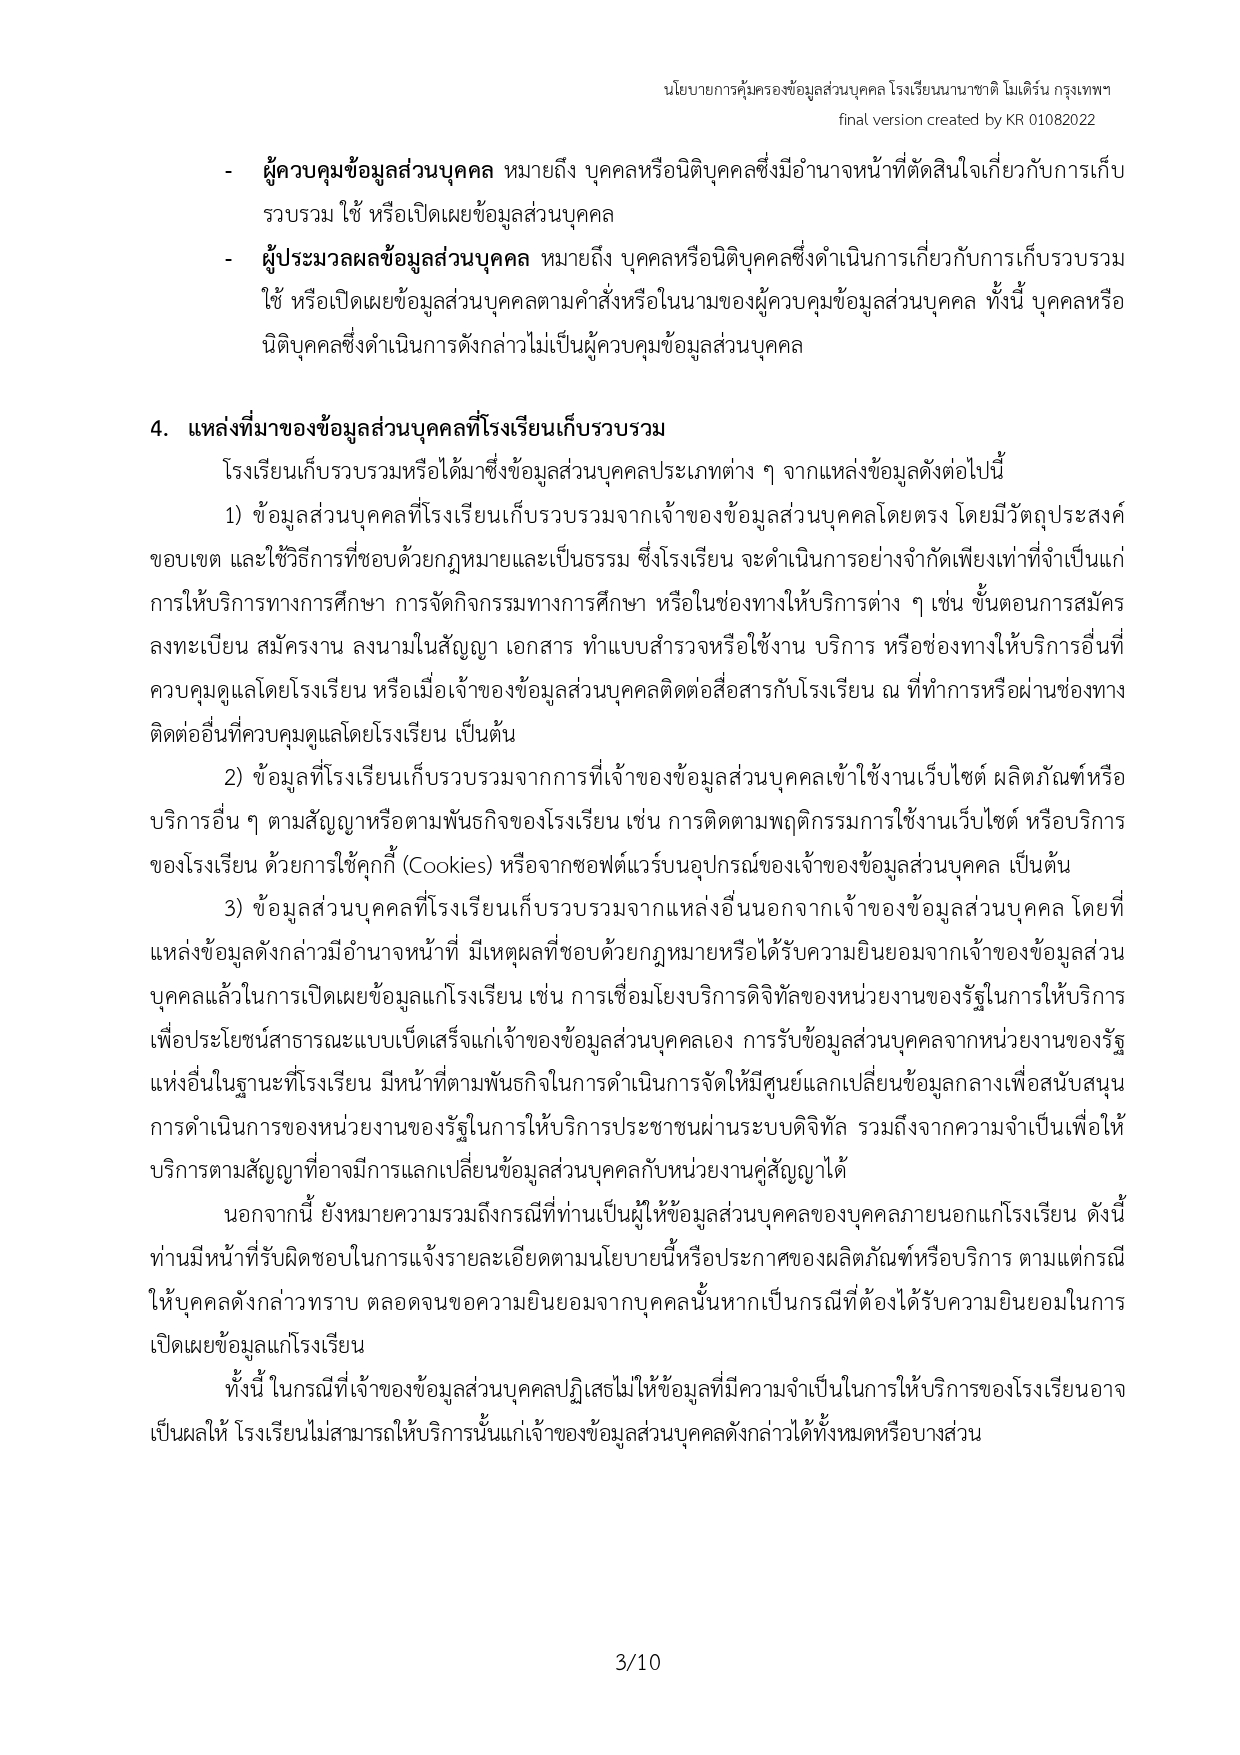 PDPA MISB ภาษาไทย final version 01012566 ไม่ลงชื่อ page 0003